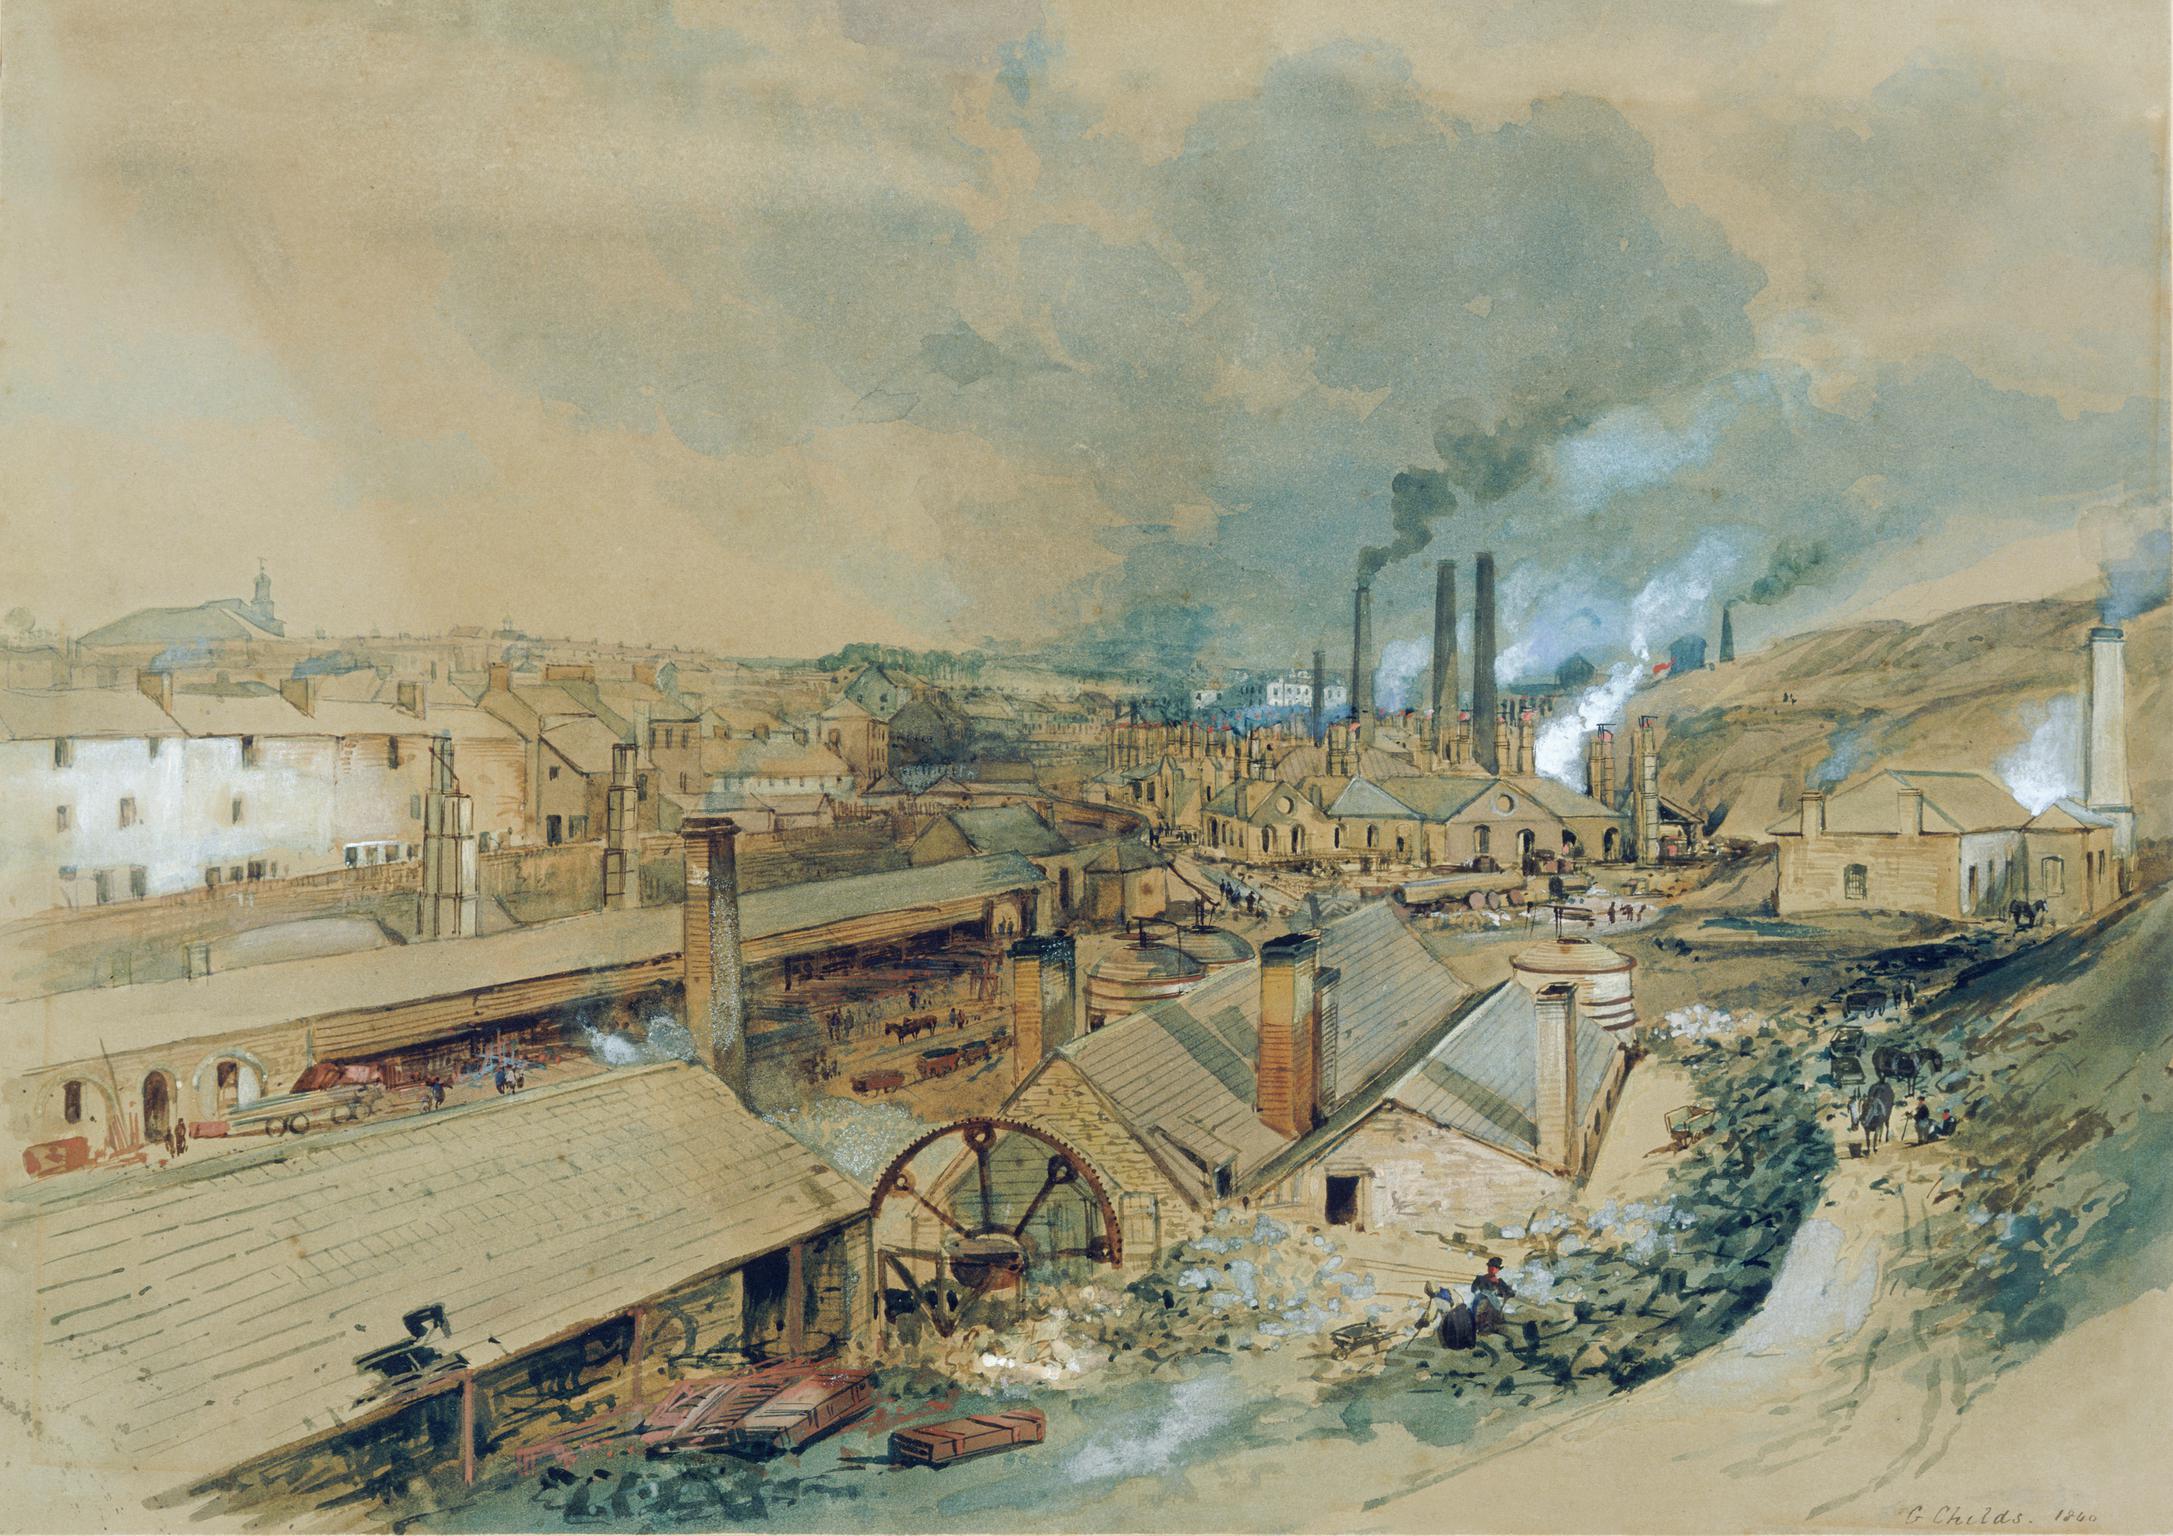 Dowlais Ironworks, 1840 (painting)